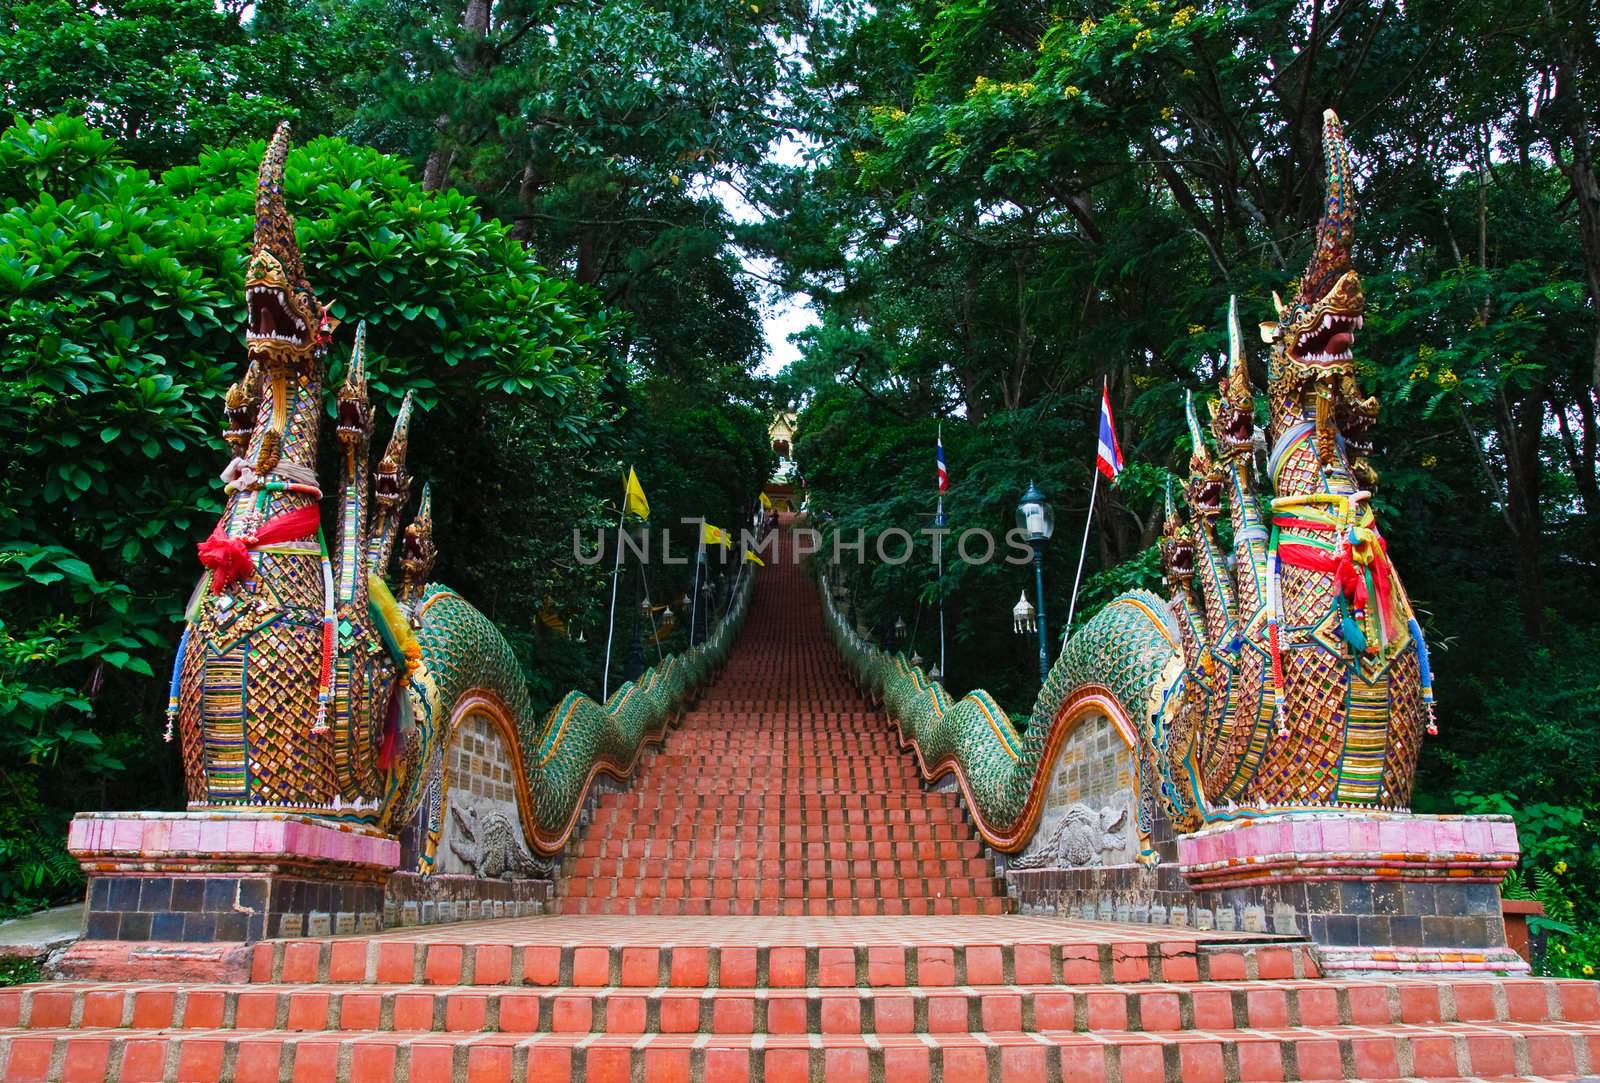 Nagaa staircase of Wat Doi suthep temple, Chiang Mai